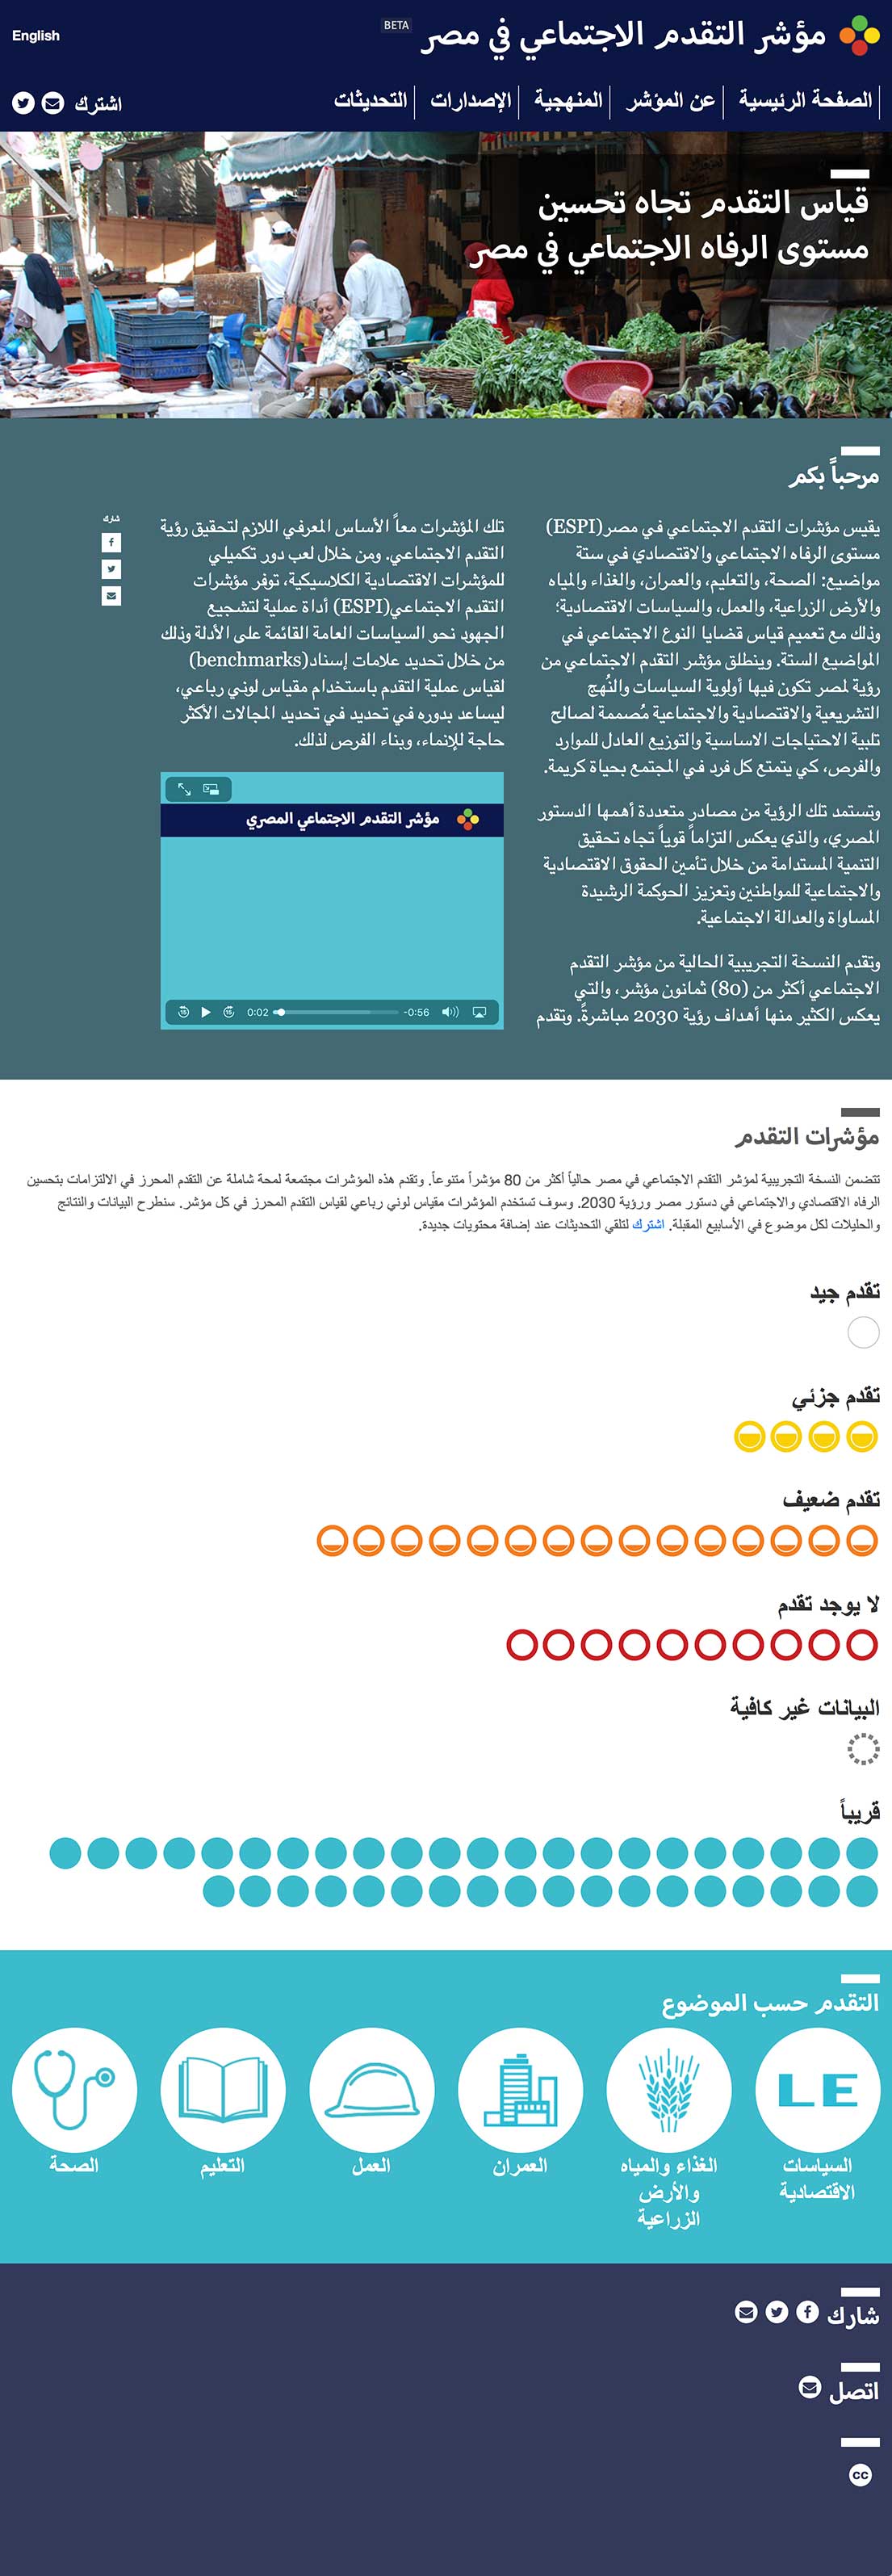 Egypt Social Progress Indicators home page, in Arabic